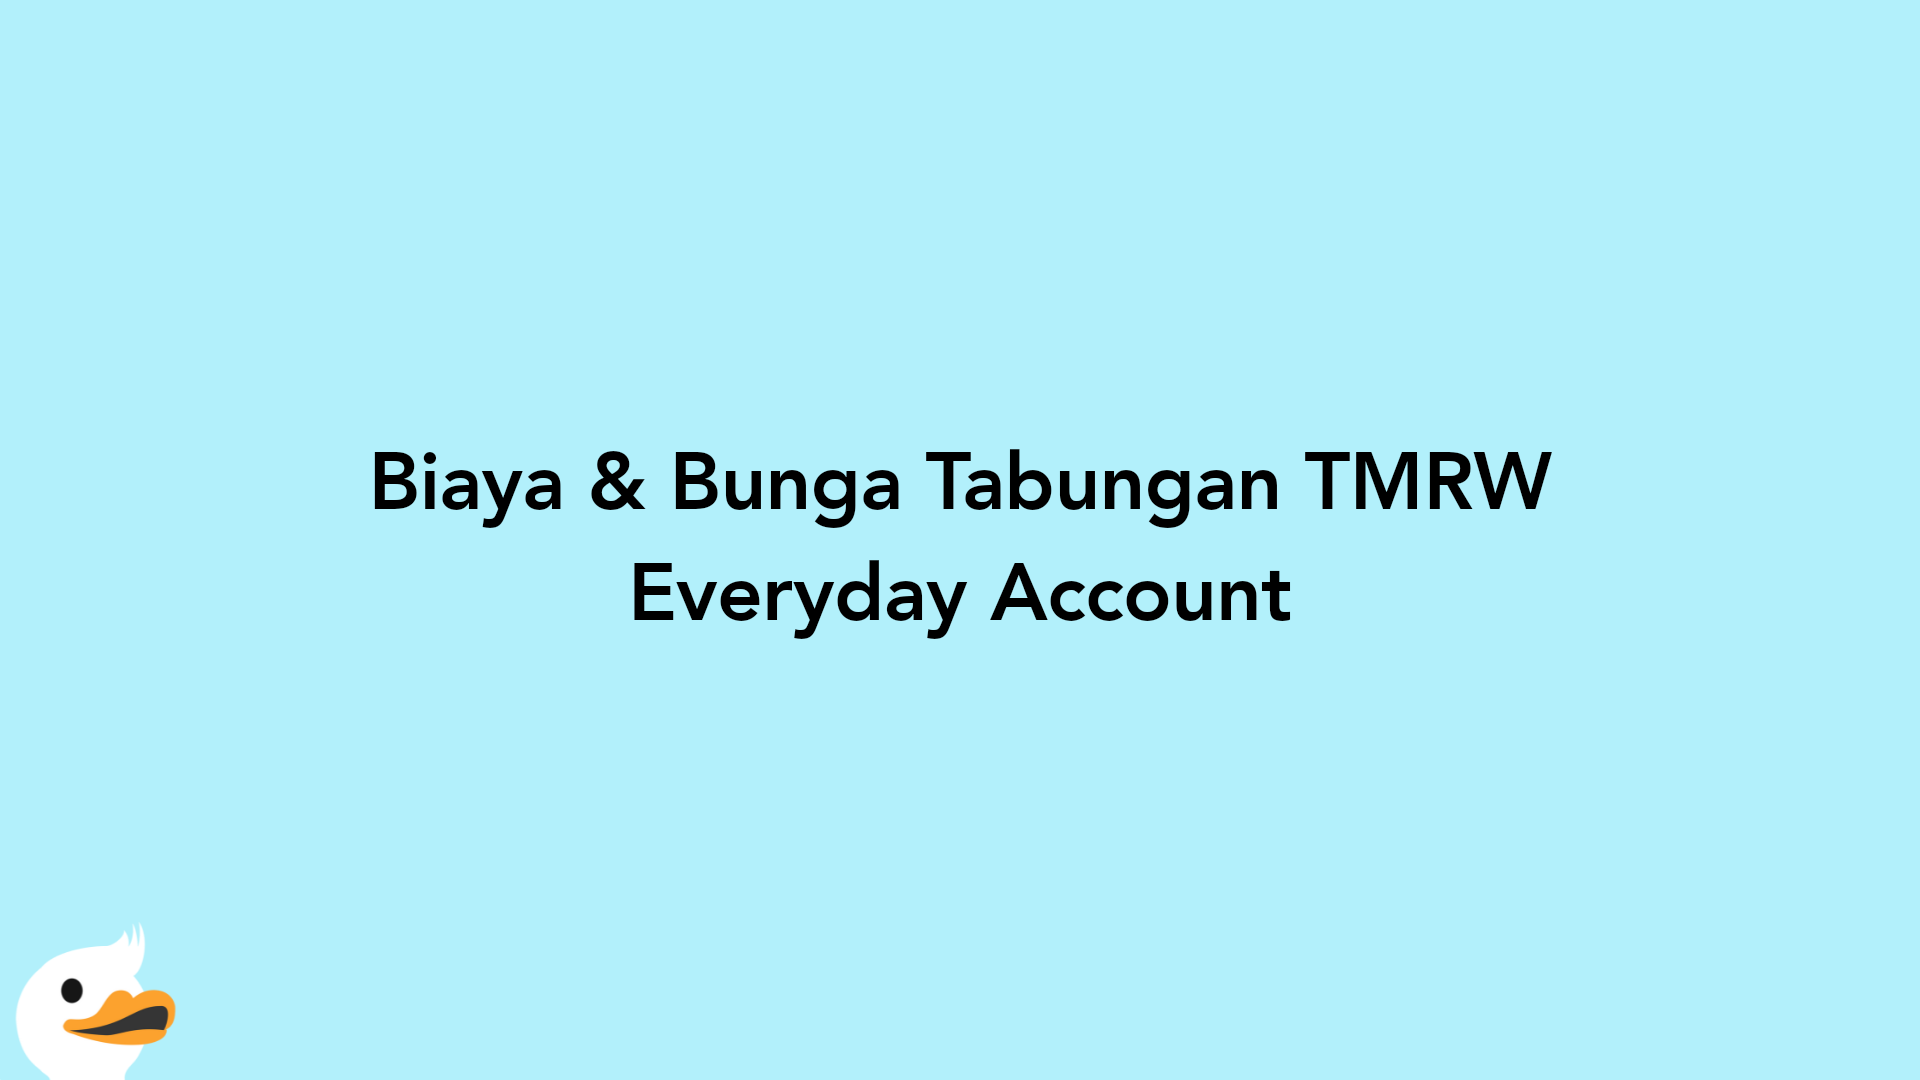 Biaya & Bunga Tabungan TMRW Everyday Account